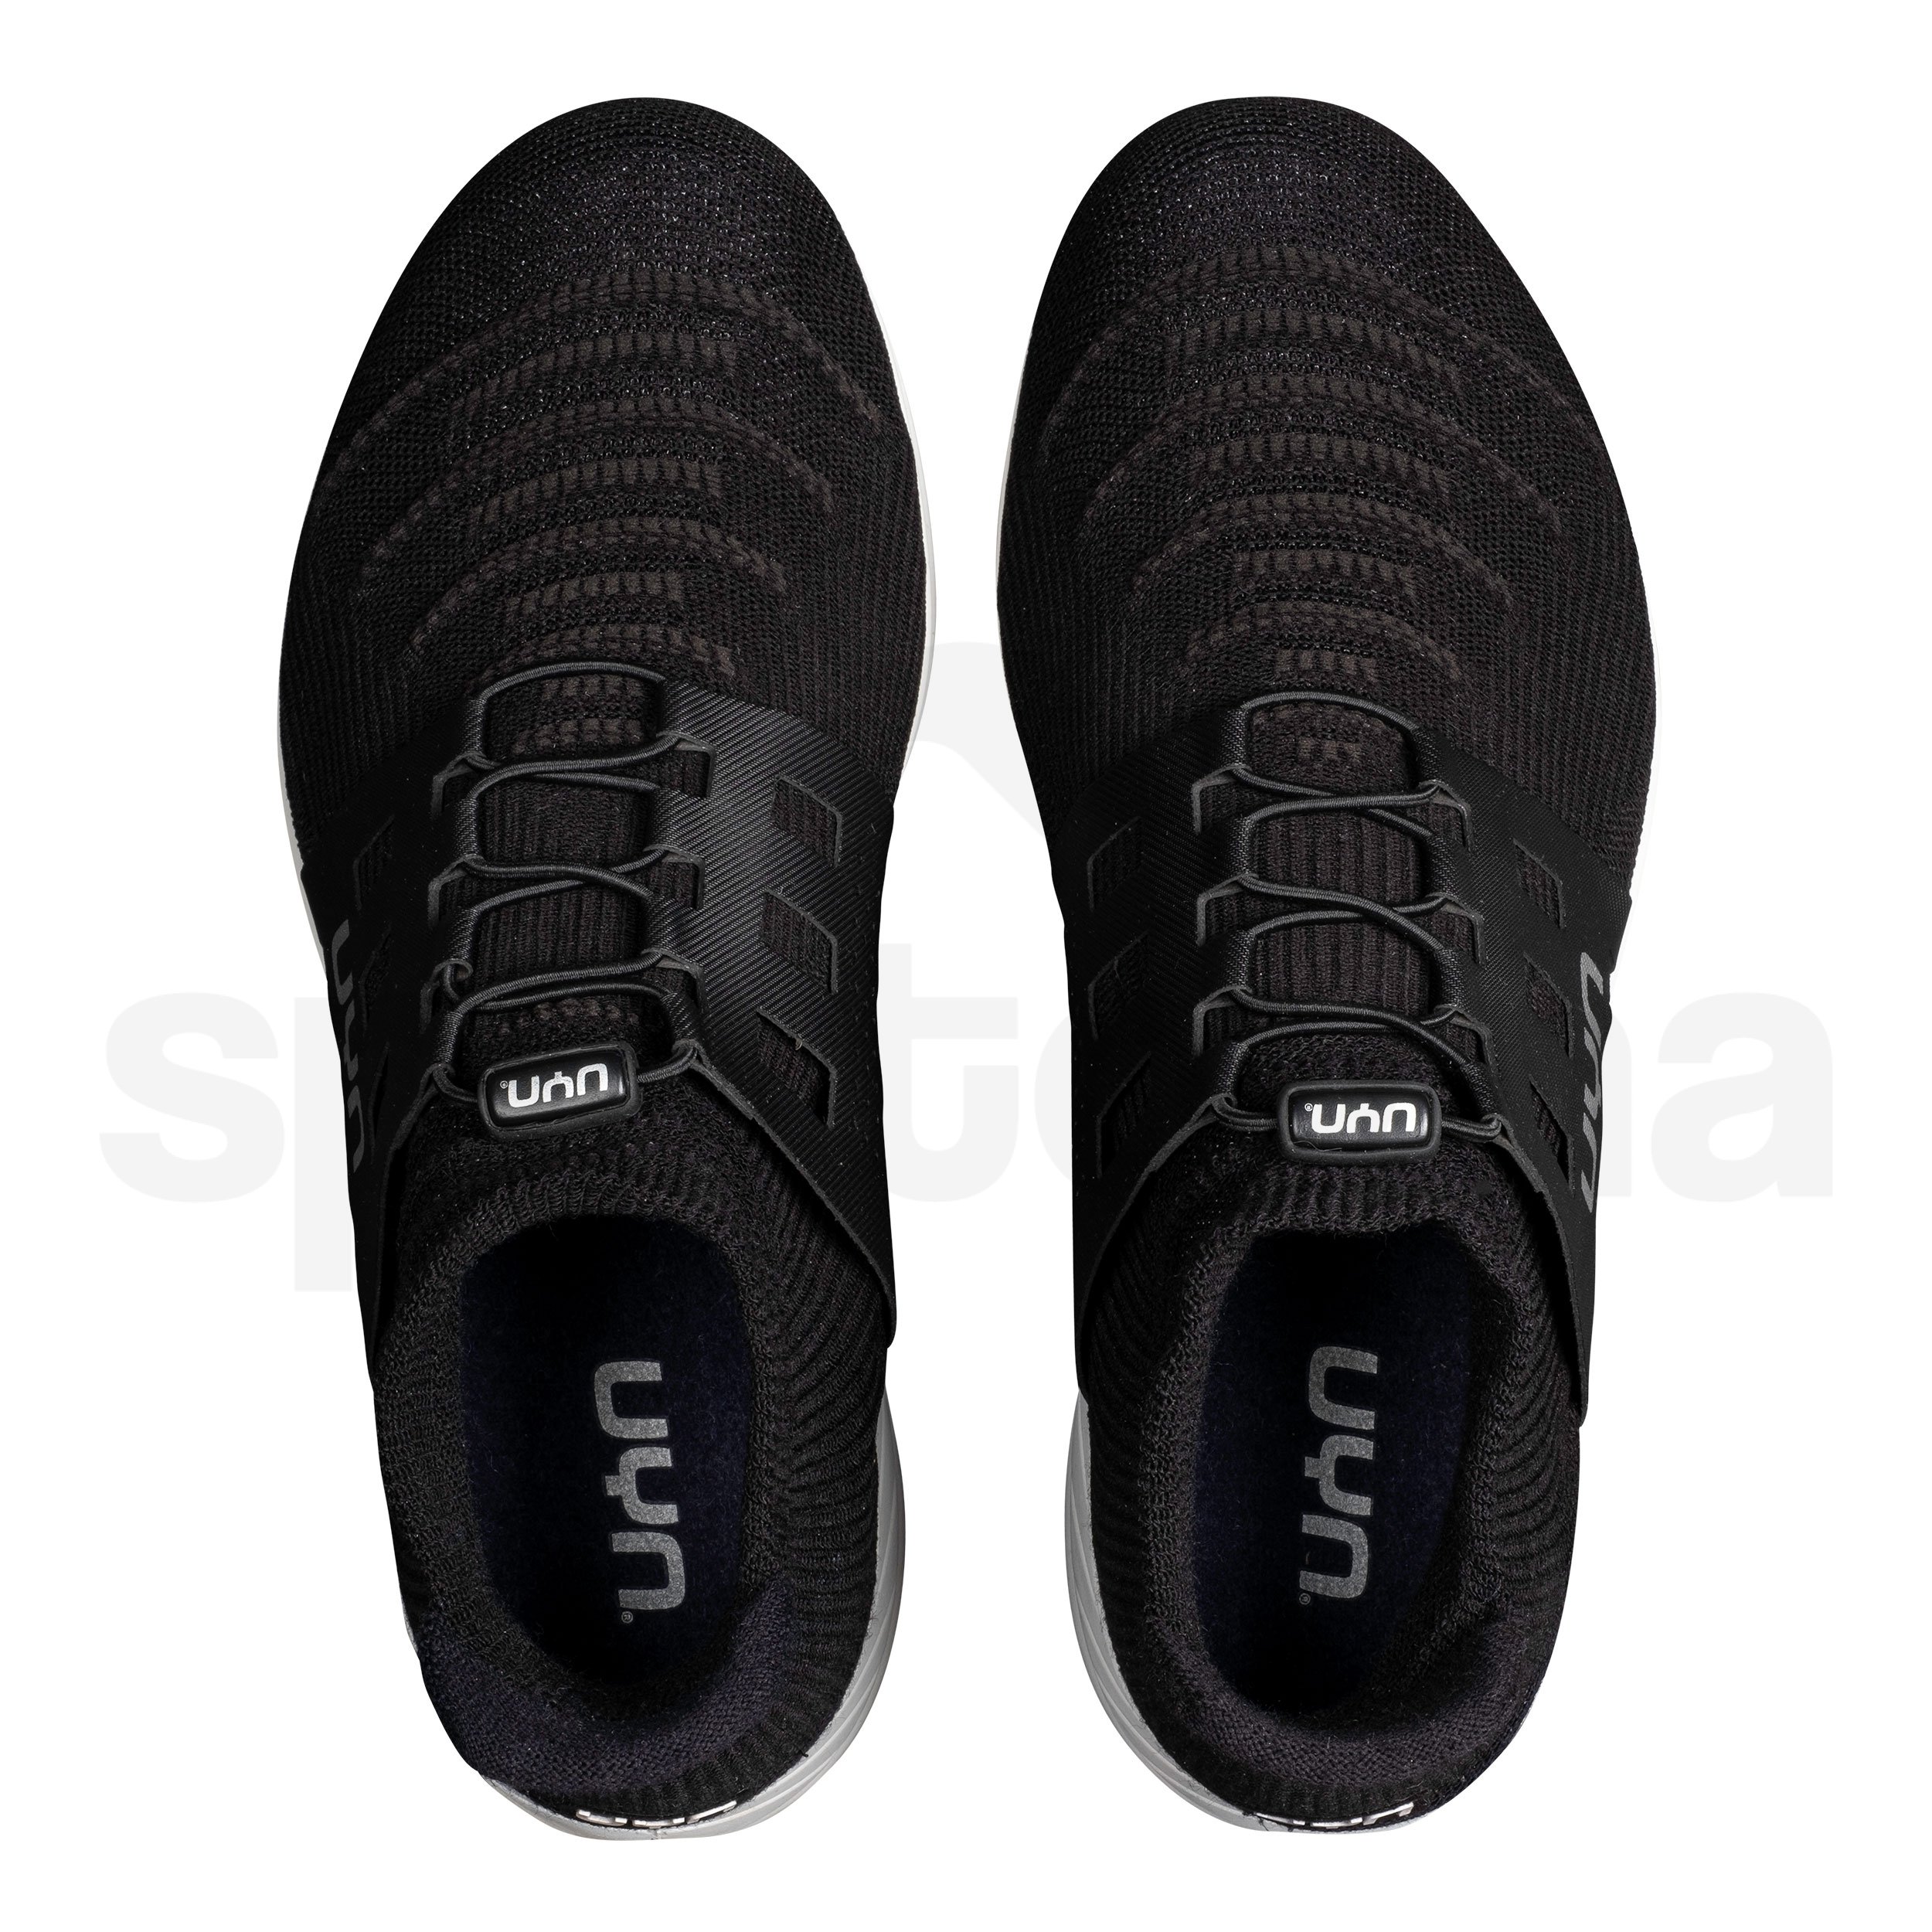 Obuv UYN x-cross tune shoes - černá/bílá